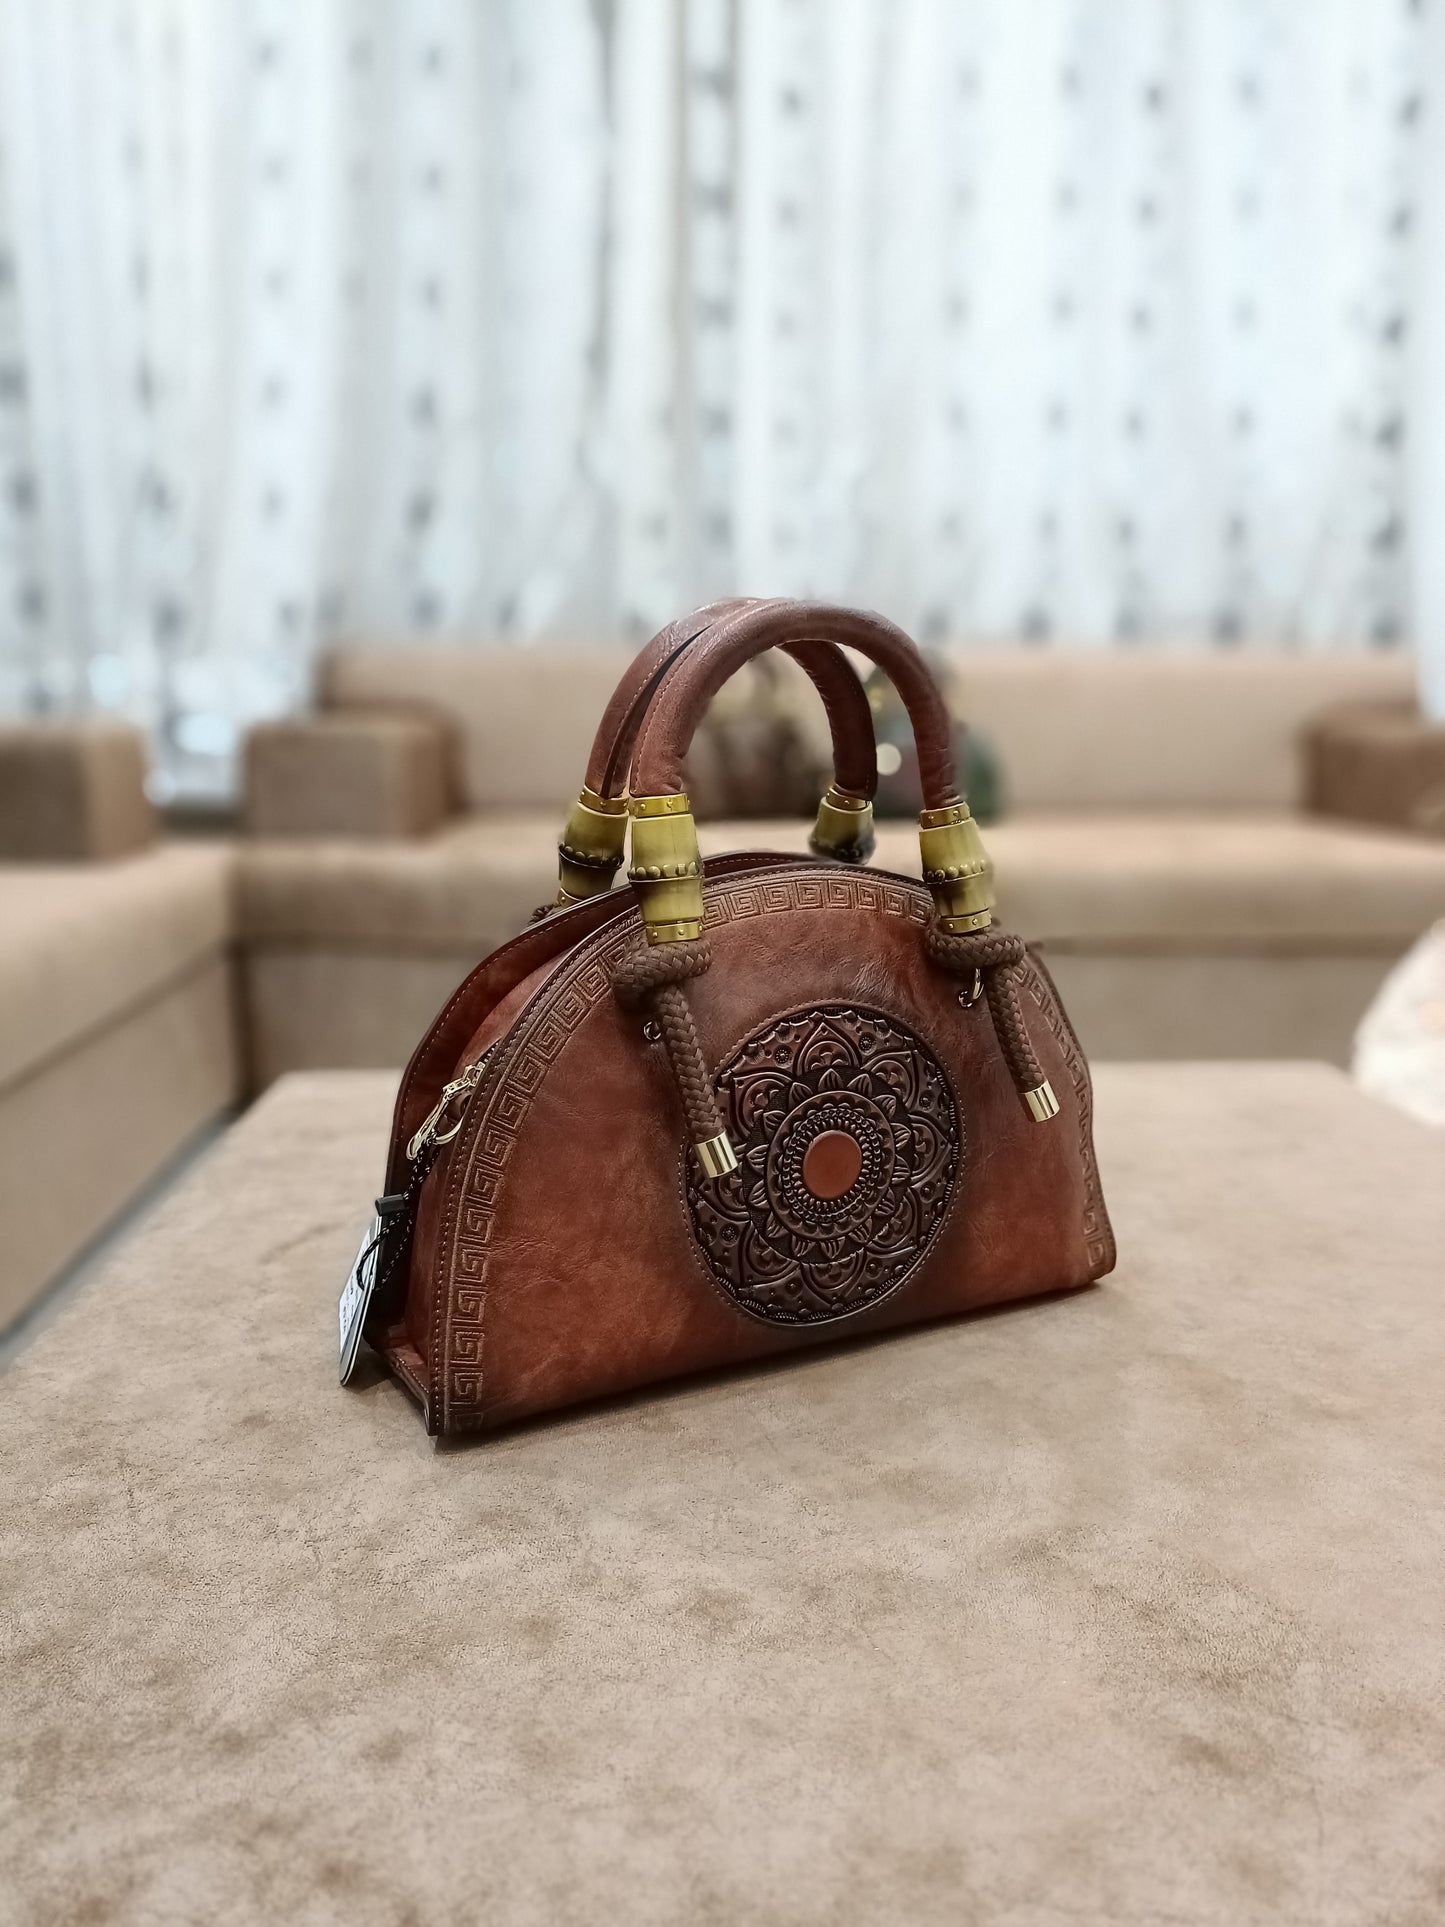 Party wear Handbag | Bridal handbag